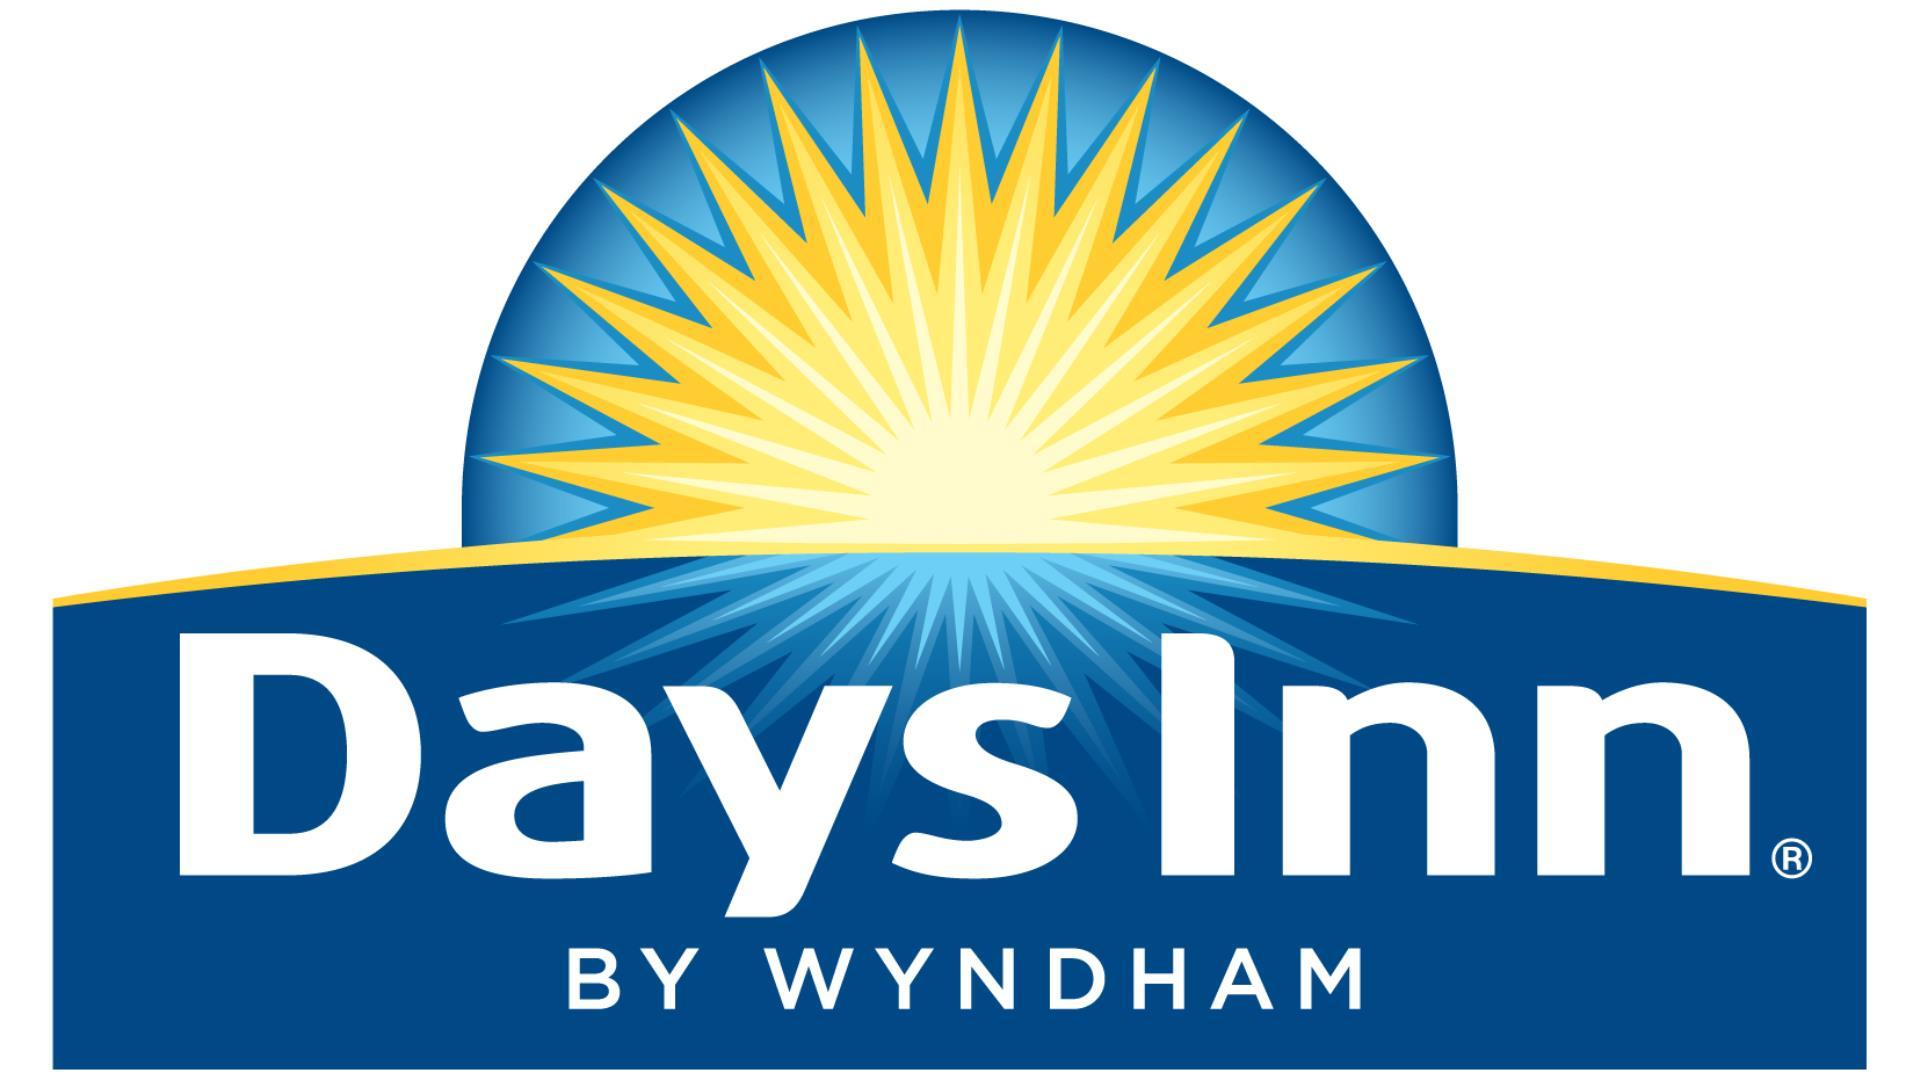 Days Inn by Wyndham Hartsfield Jackson Atlanta Airport West in East Point, GA